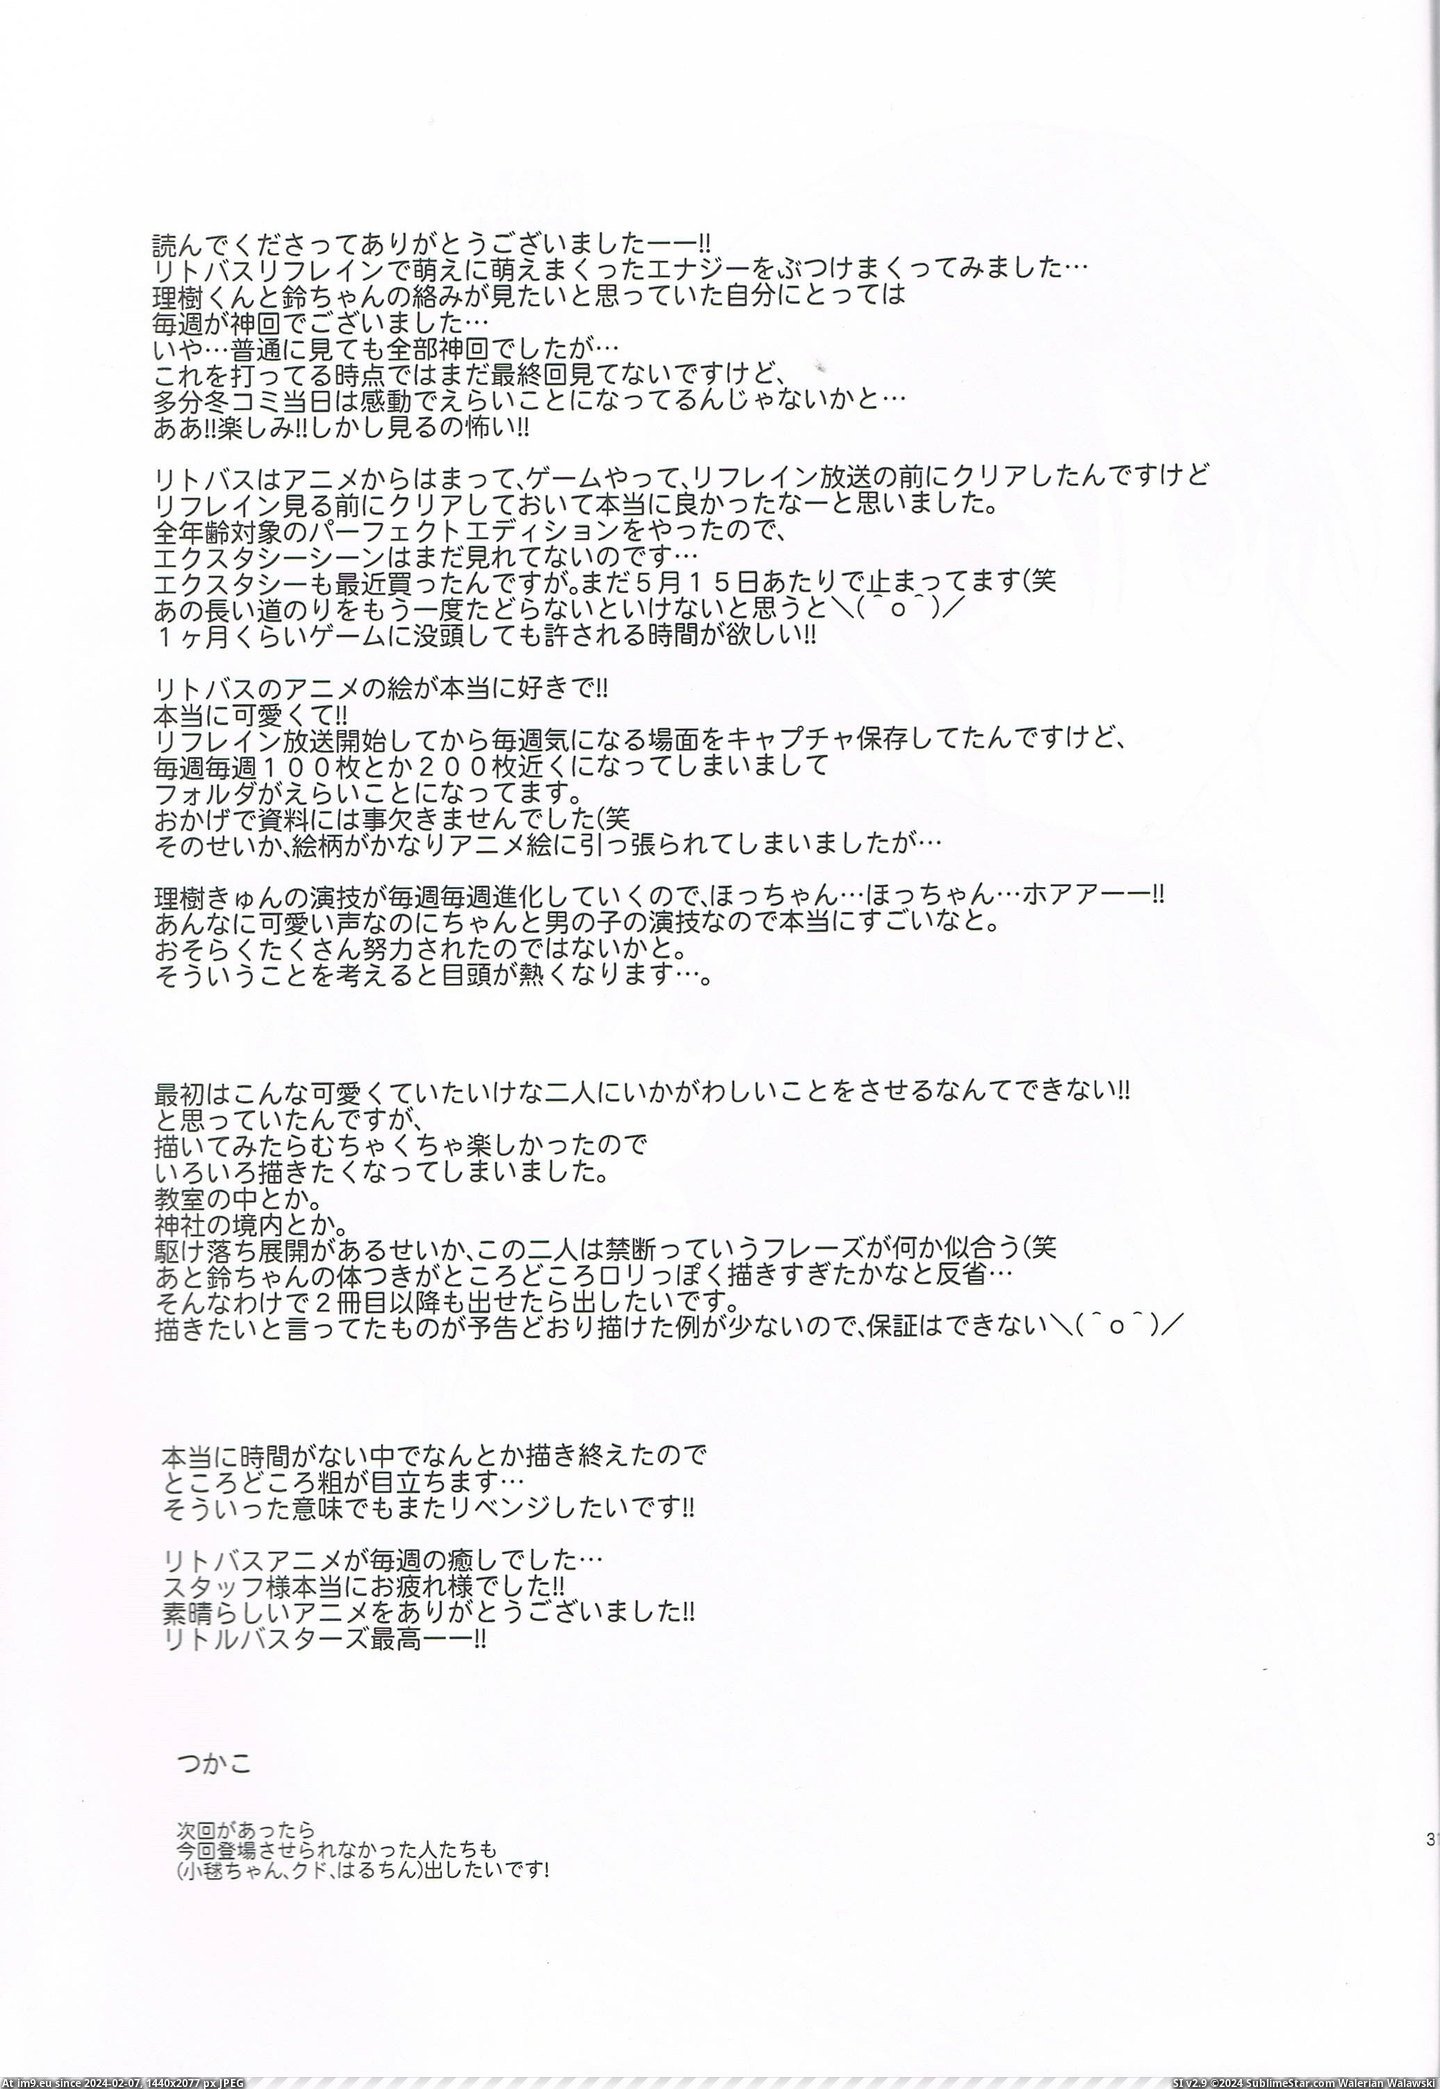 #Hentai #Busters #Saikou #Gallery [Hentai] Little Busters Saikou! (Little Busters Hentai Gallery) 62 Pic. (Bild von album My r/HENTAI favs))